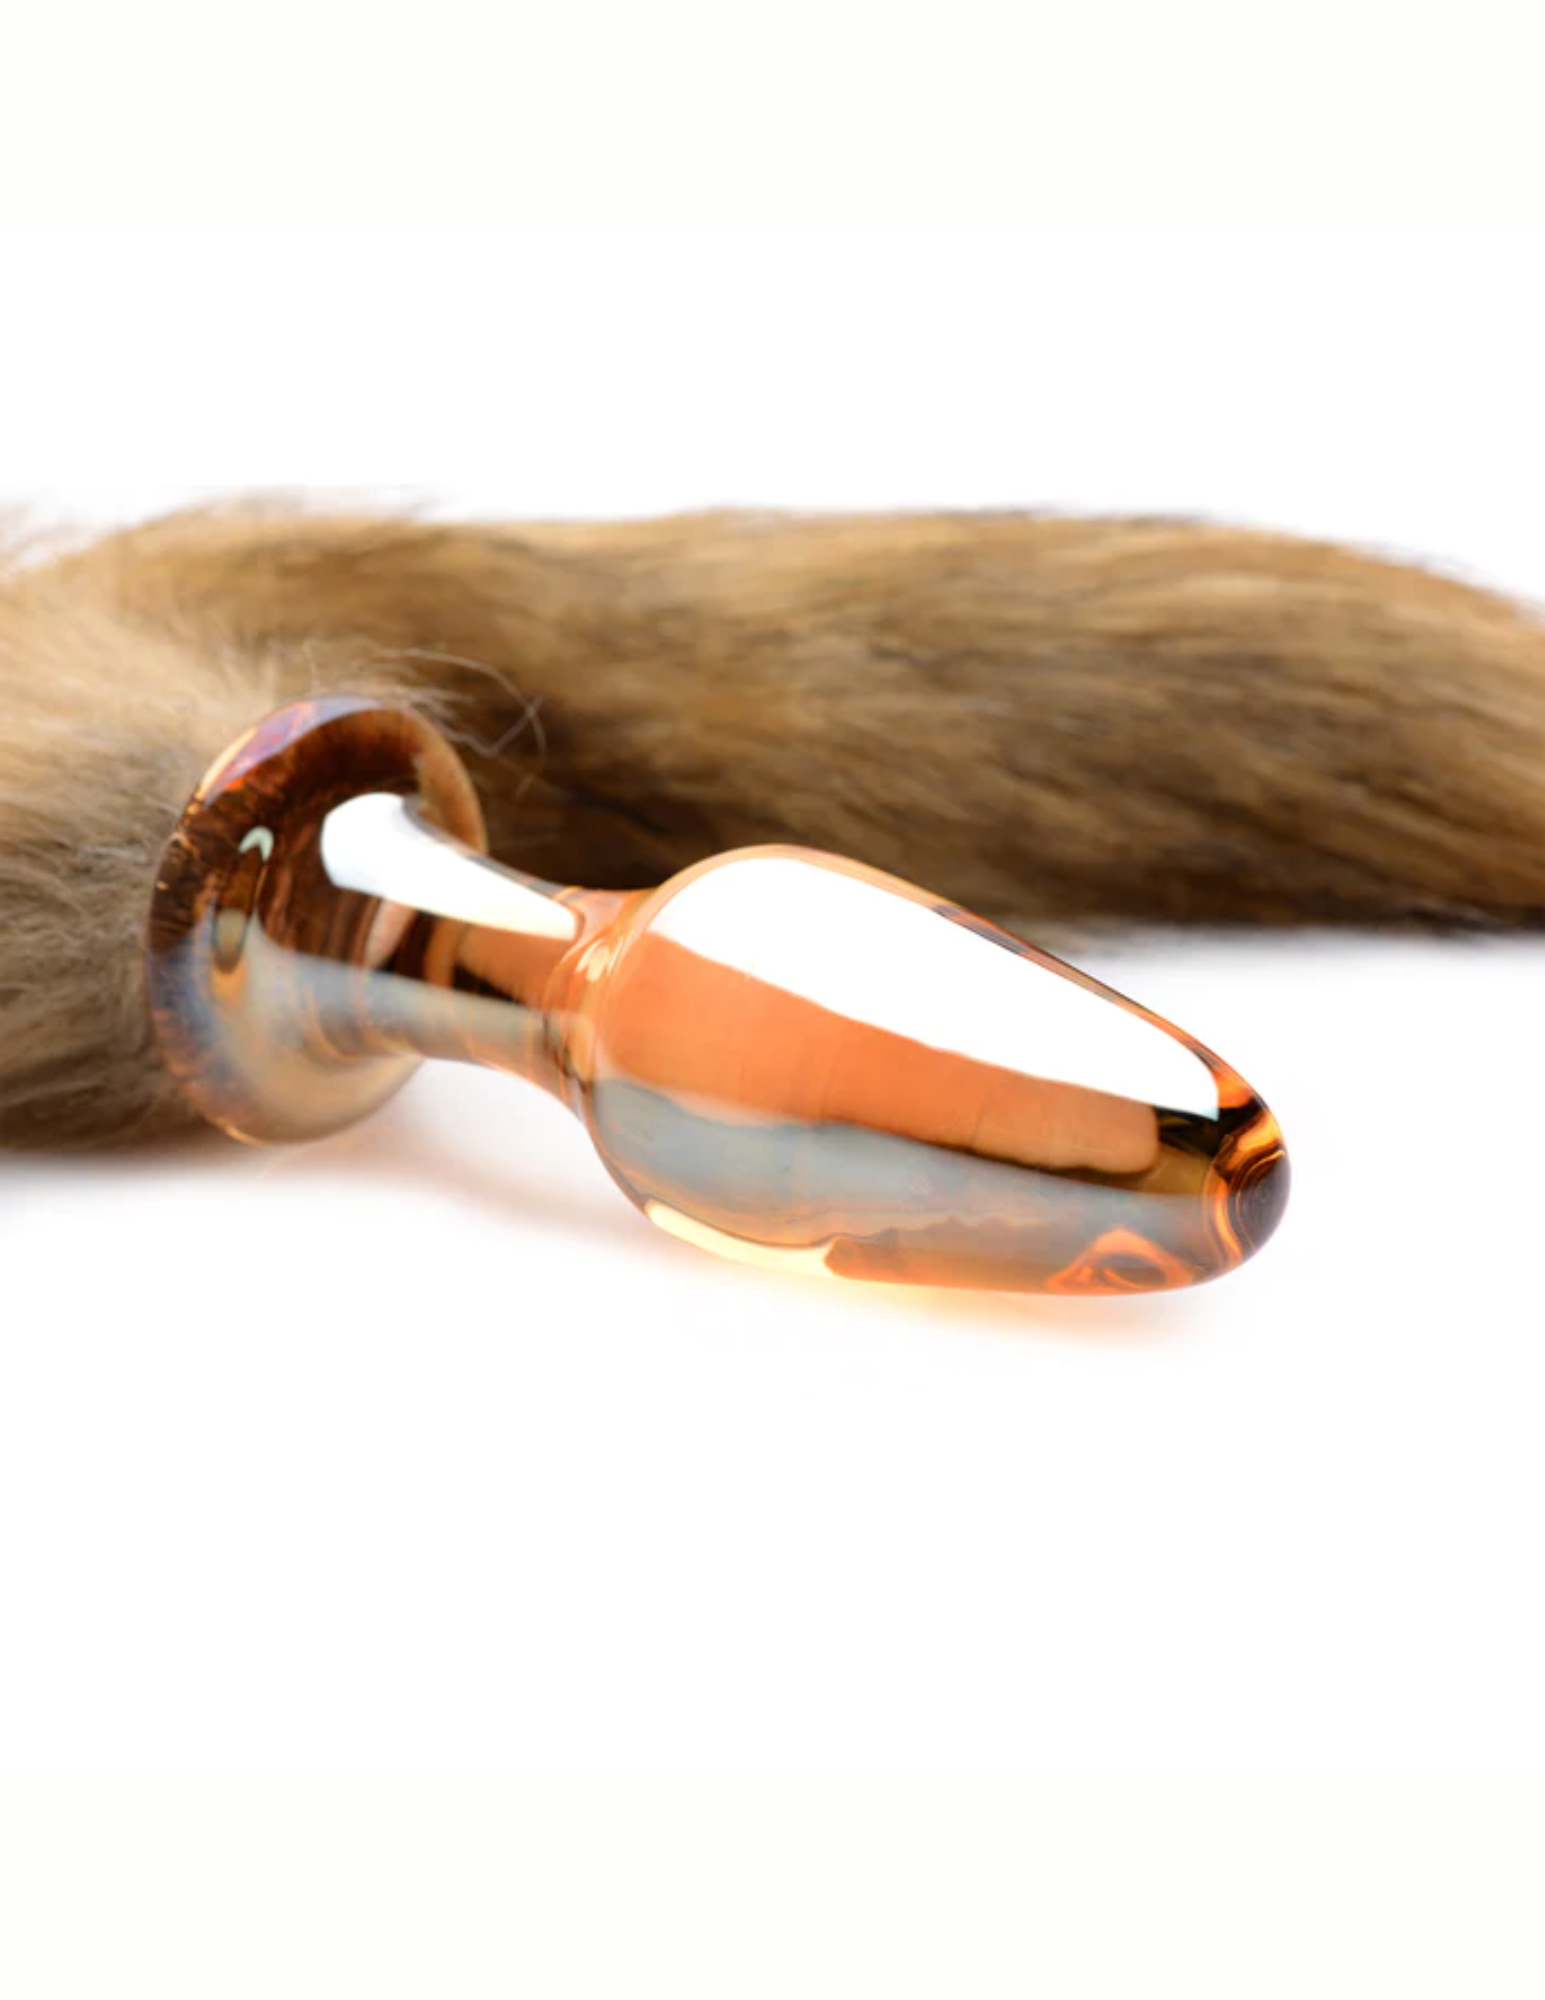 Photo of the fox tail glass anal plug.